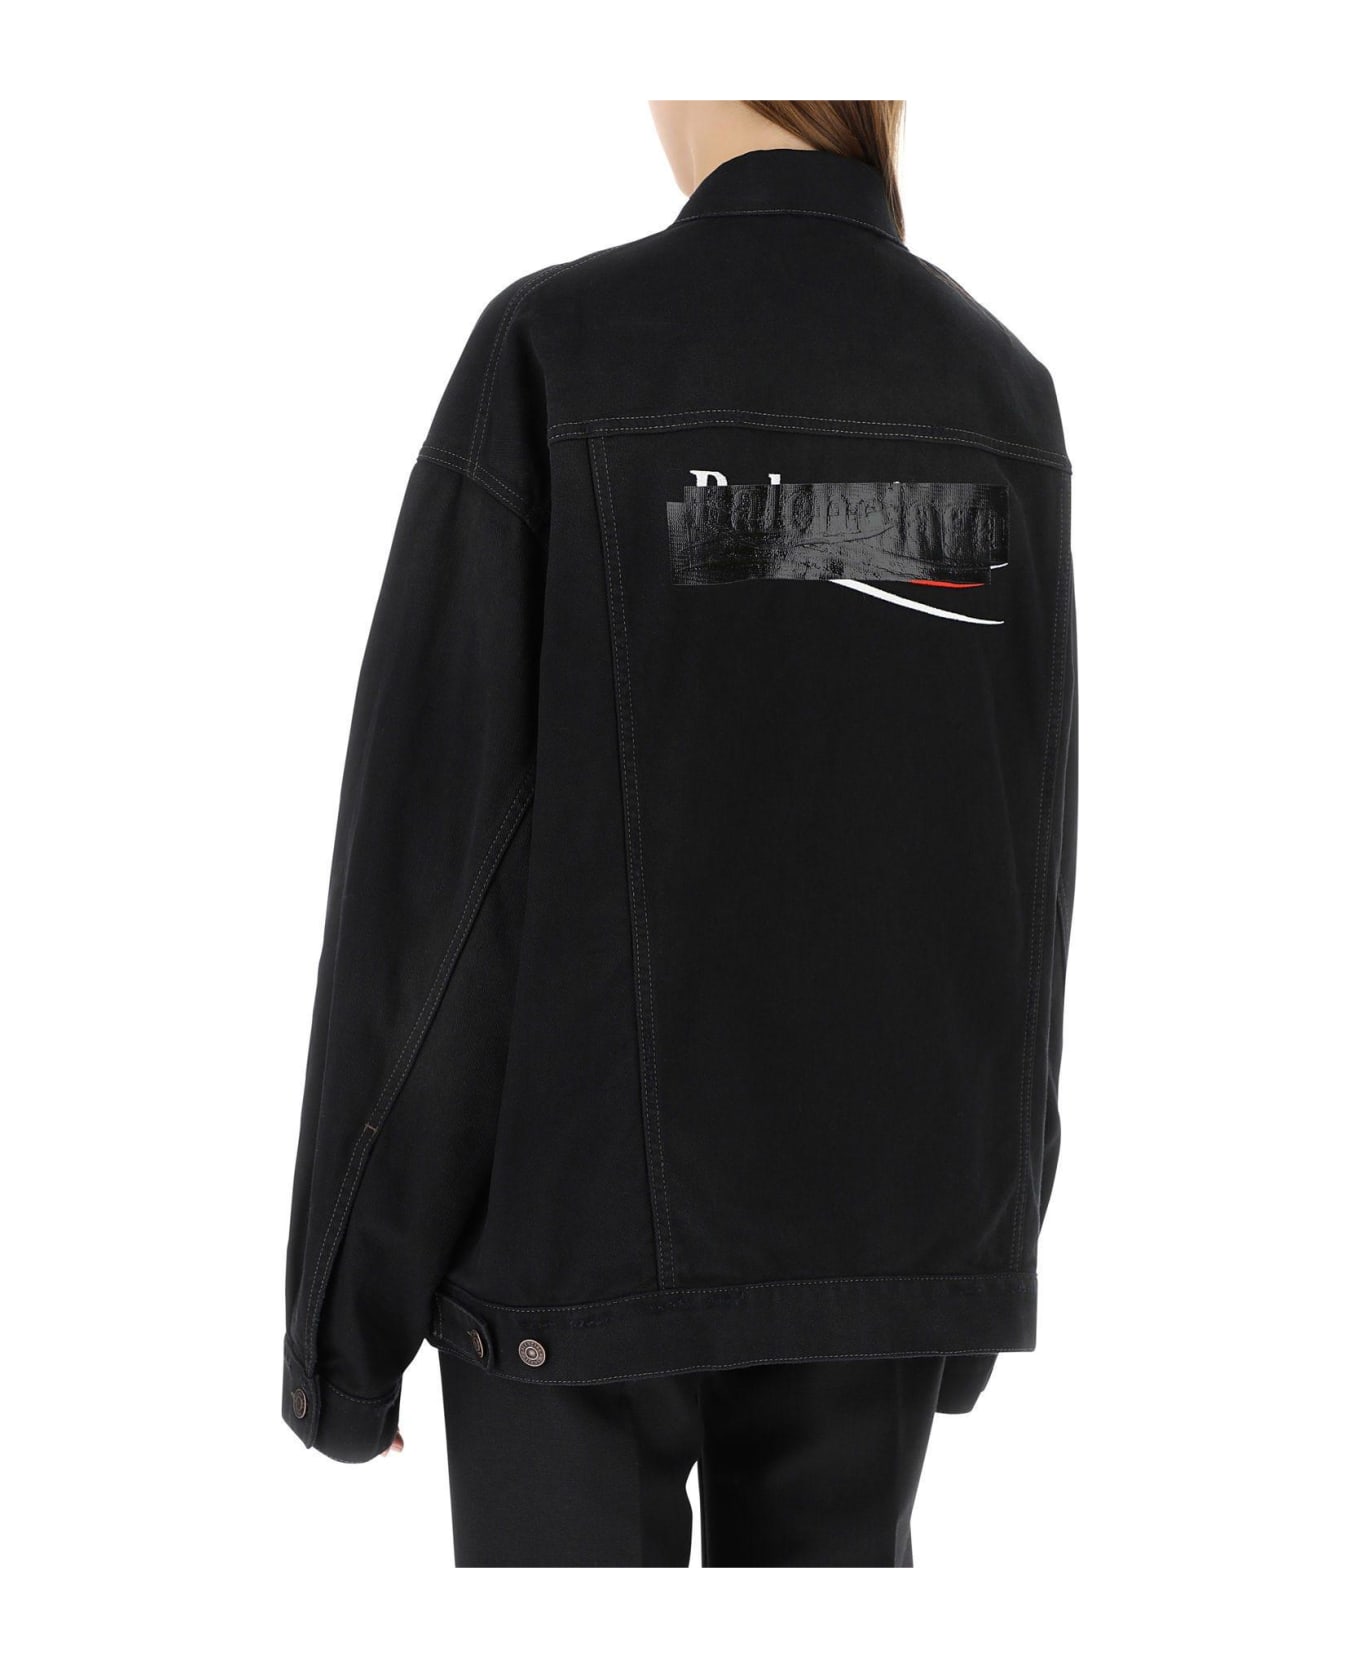 Balenciaga Black Denim Oversize Jacket - Matte Black